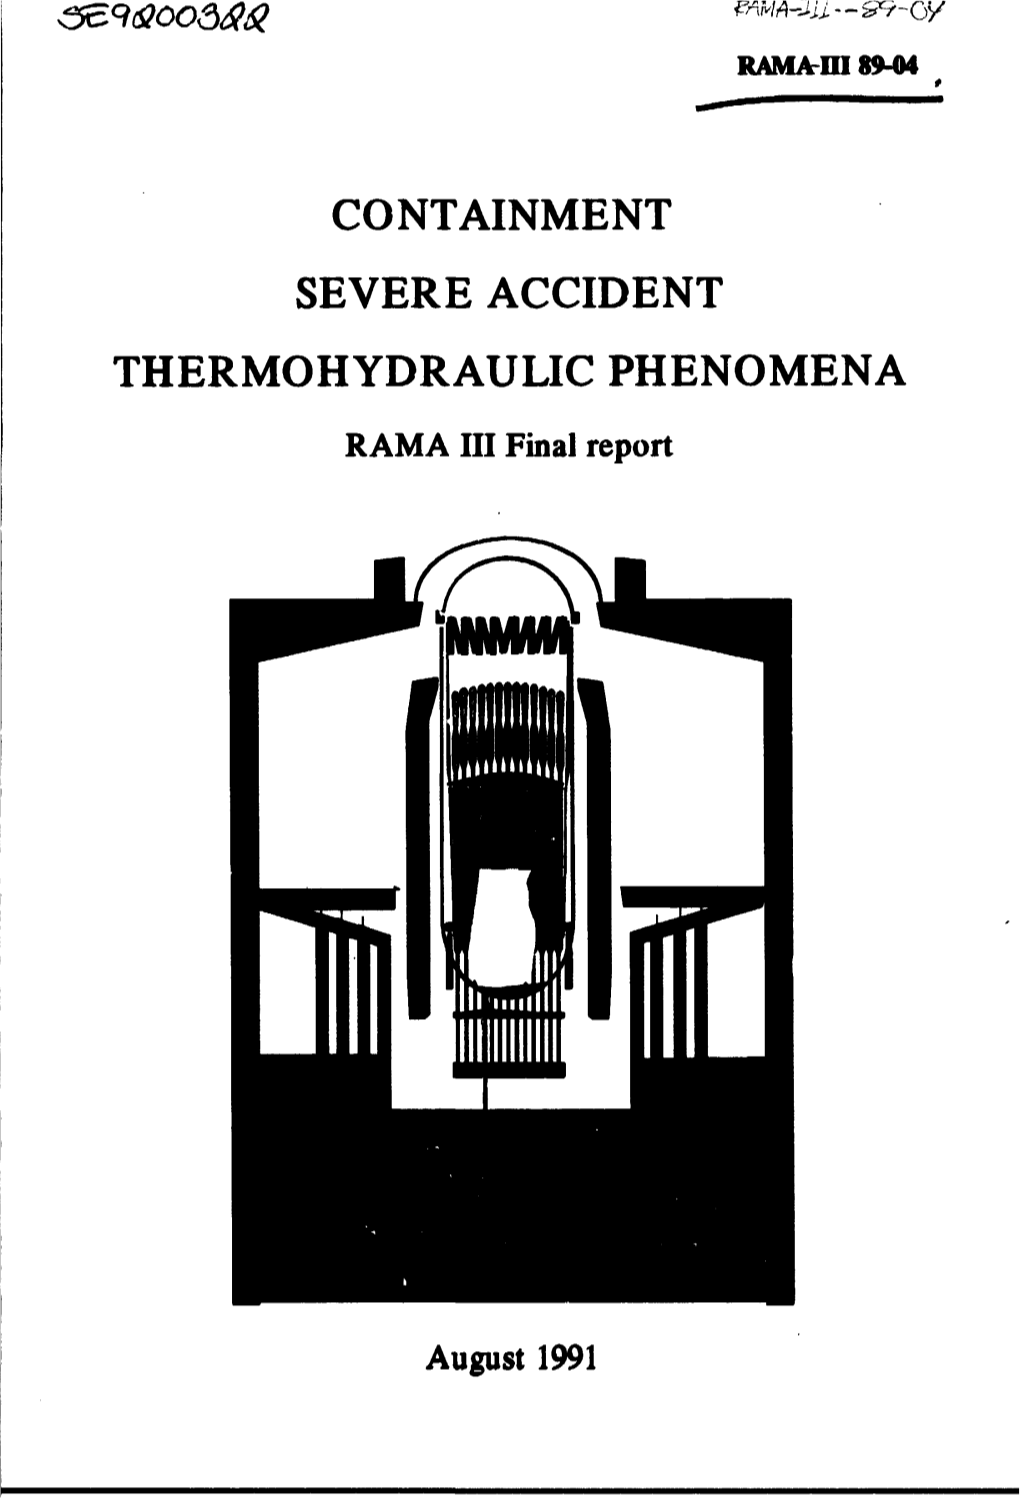 CONTAINMENT SEVERE ACCIDENT THERMOHYDRAULIC PHENOMENA RAMA III Final Report